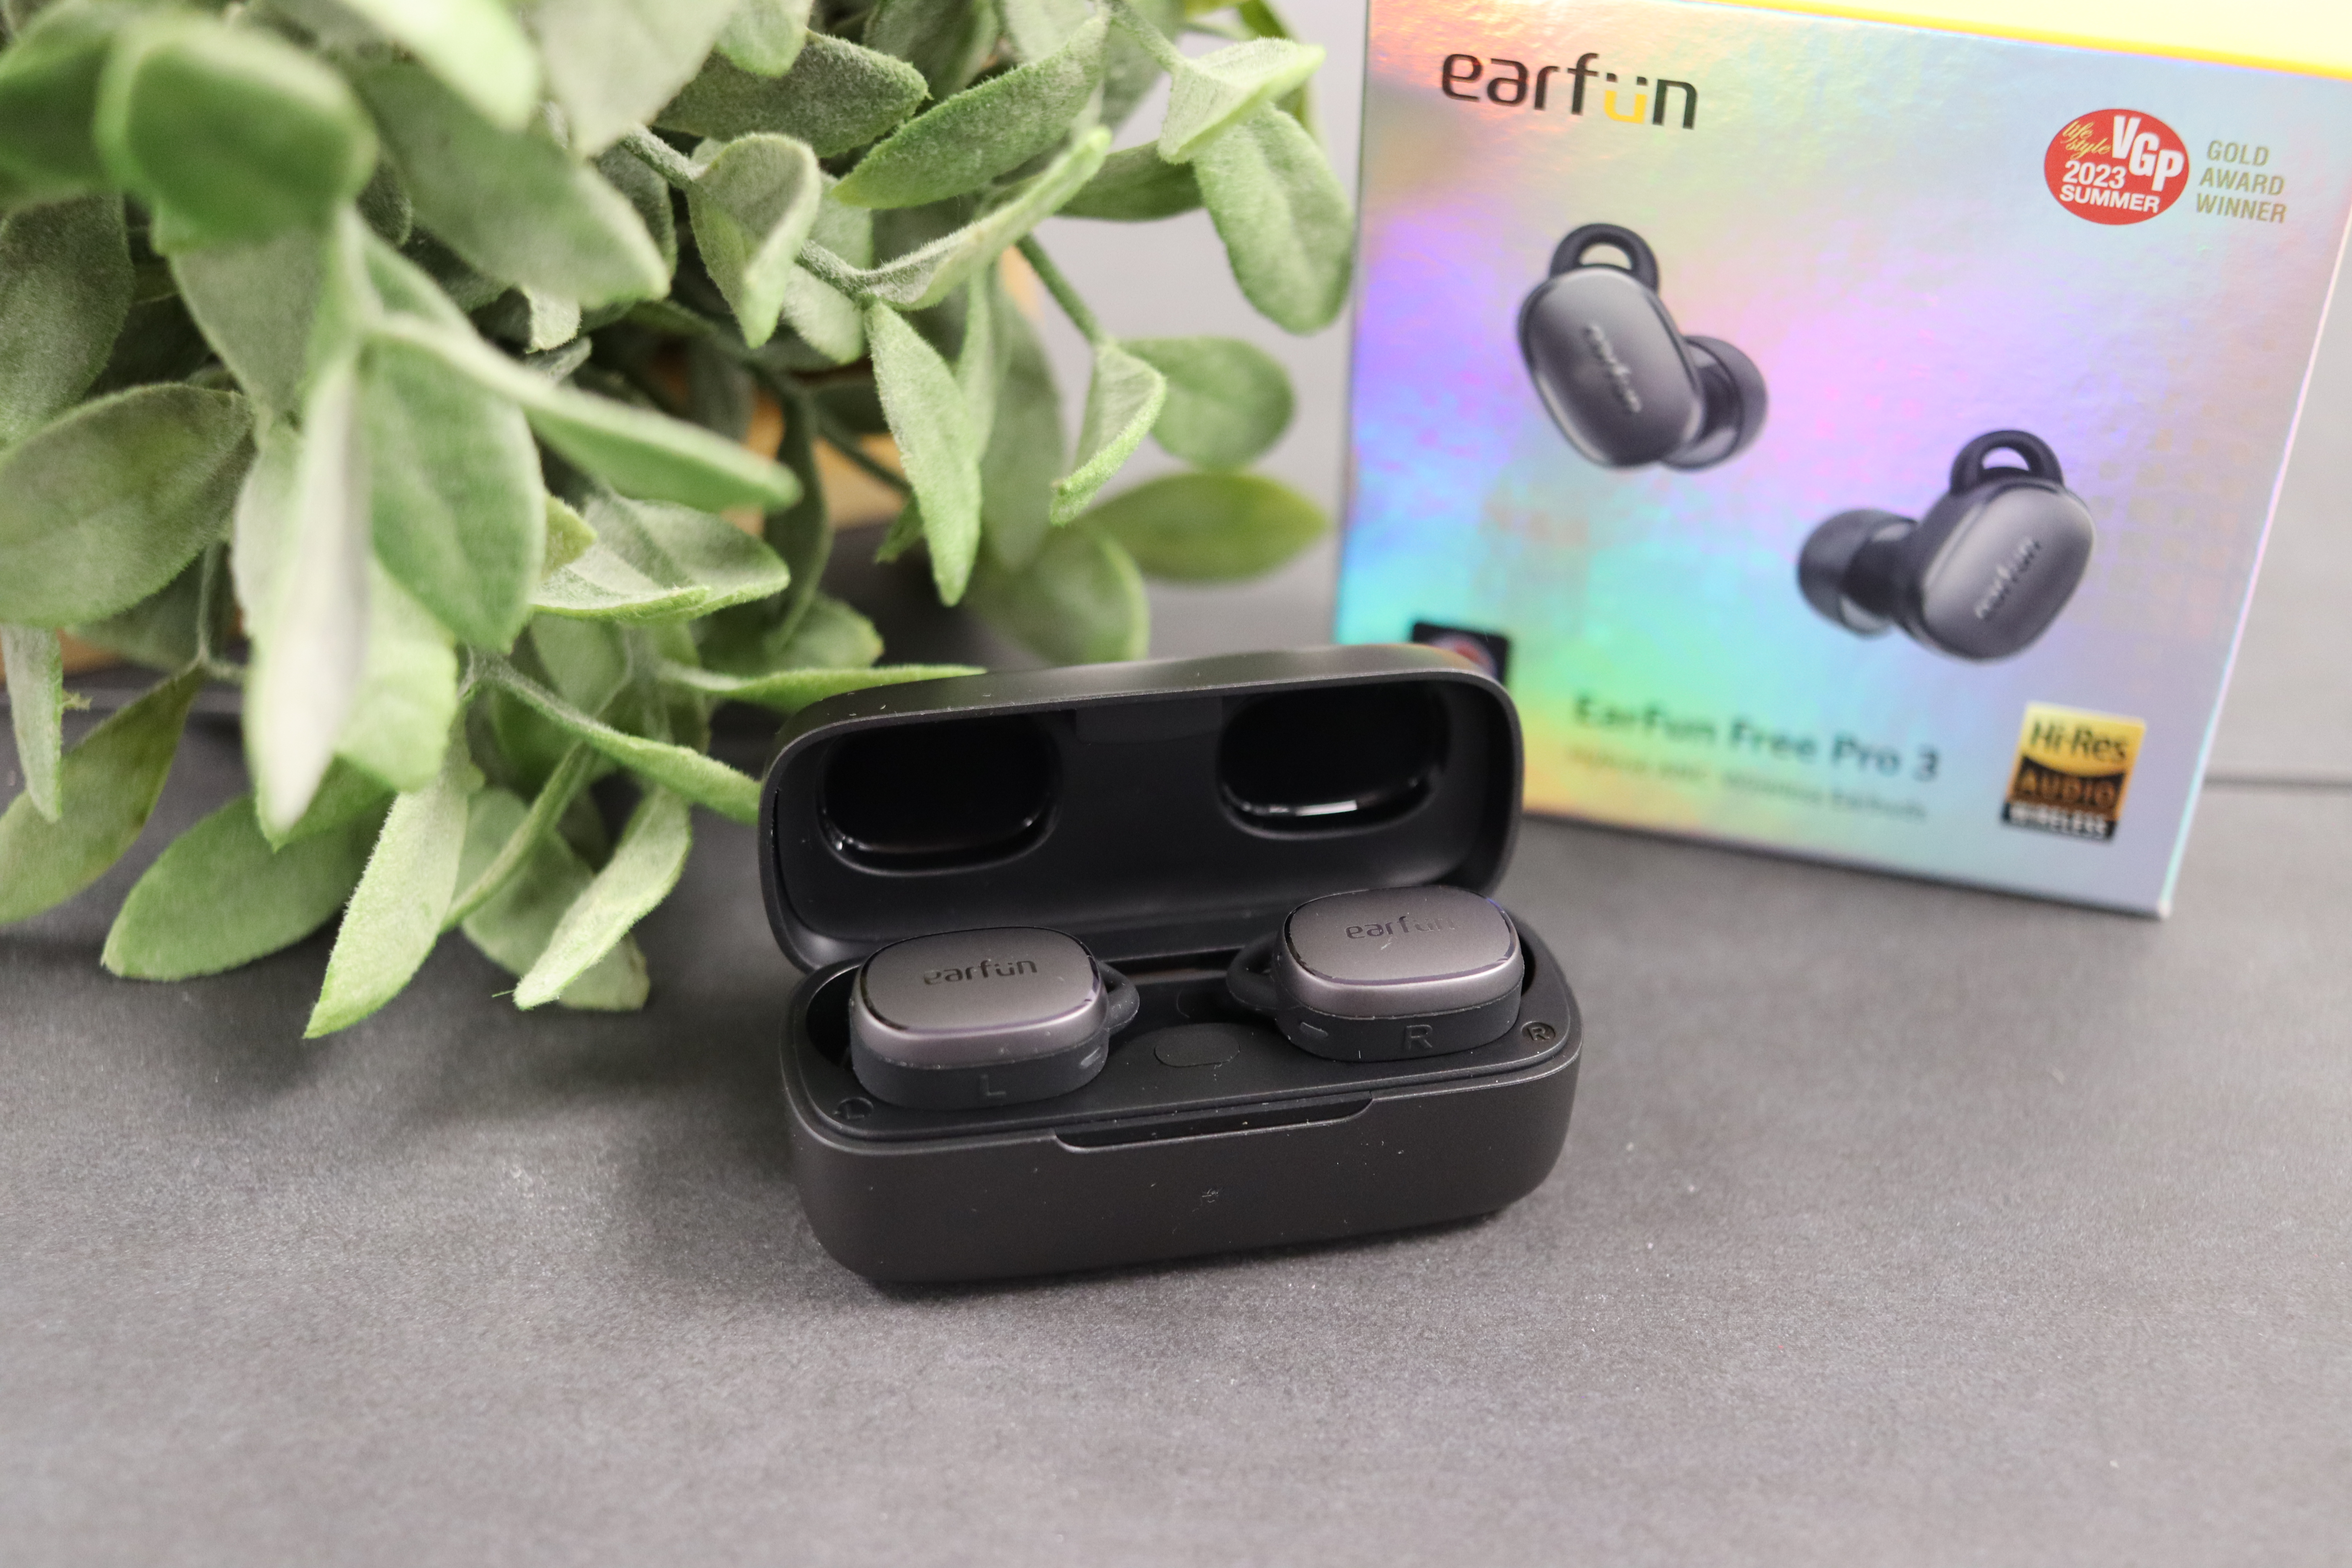 Test: Earfun Free Pro 3 ANC-In-Ears mit Snapdragon Sound